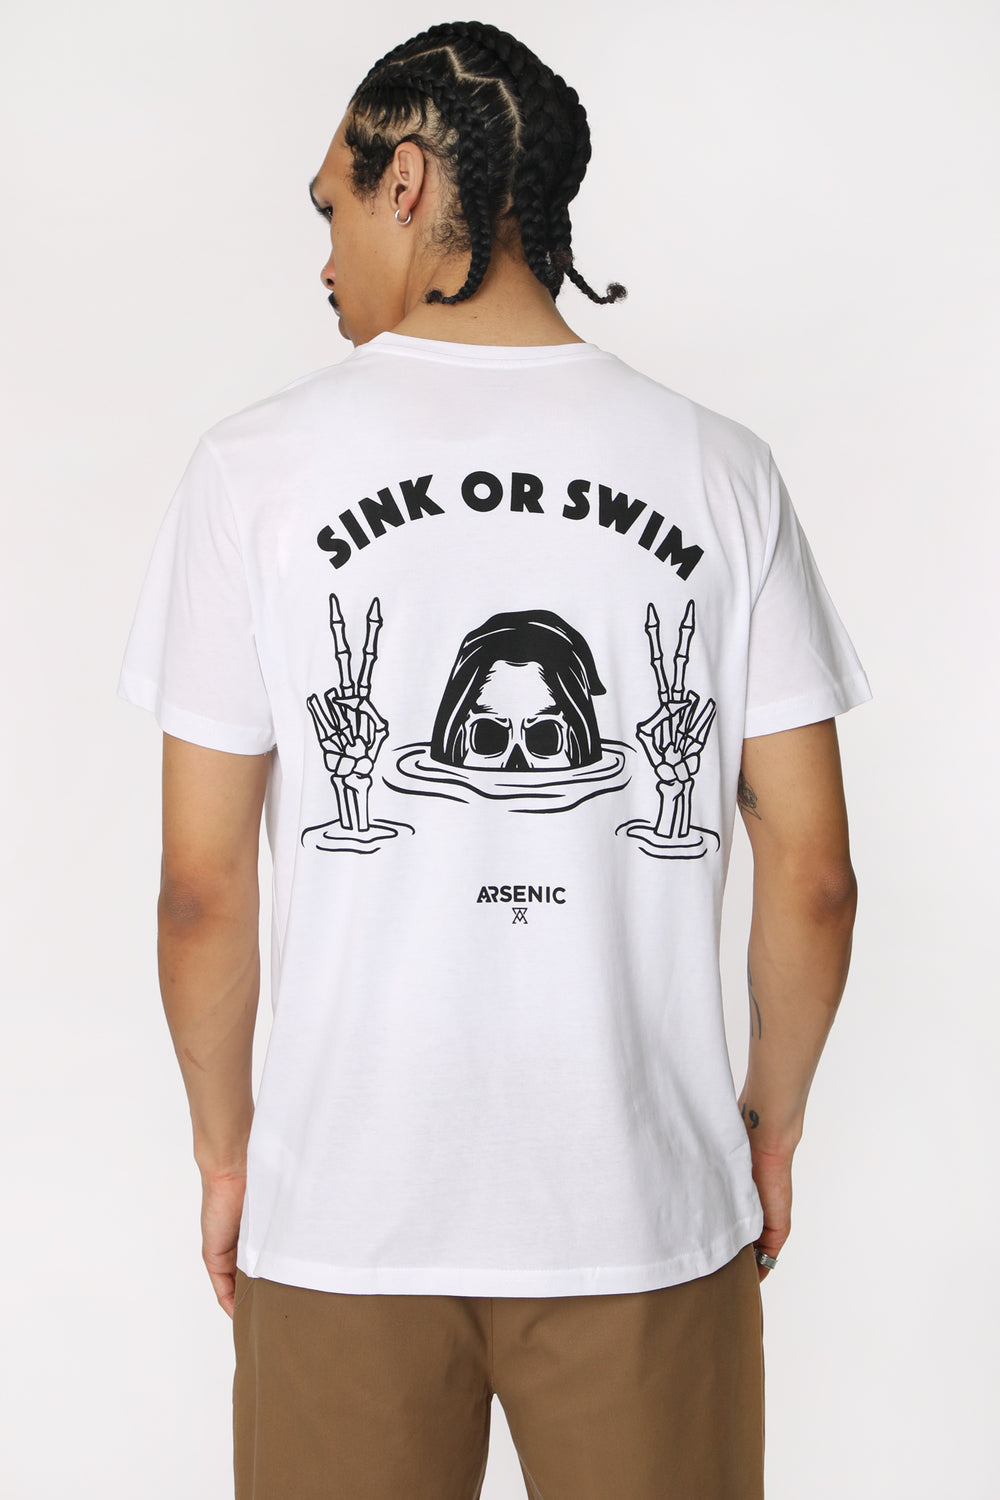 T-Shirt Imprimé Sink Or Swim Arsenic Homme T-Shirt Imprimé Sink Or Swim Arsenic Homme